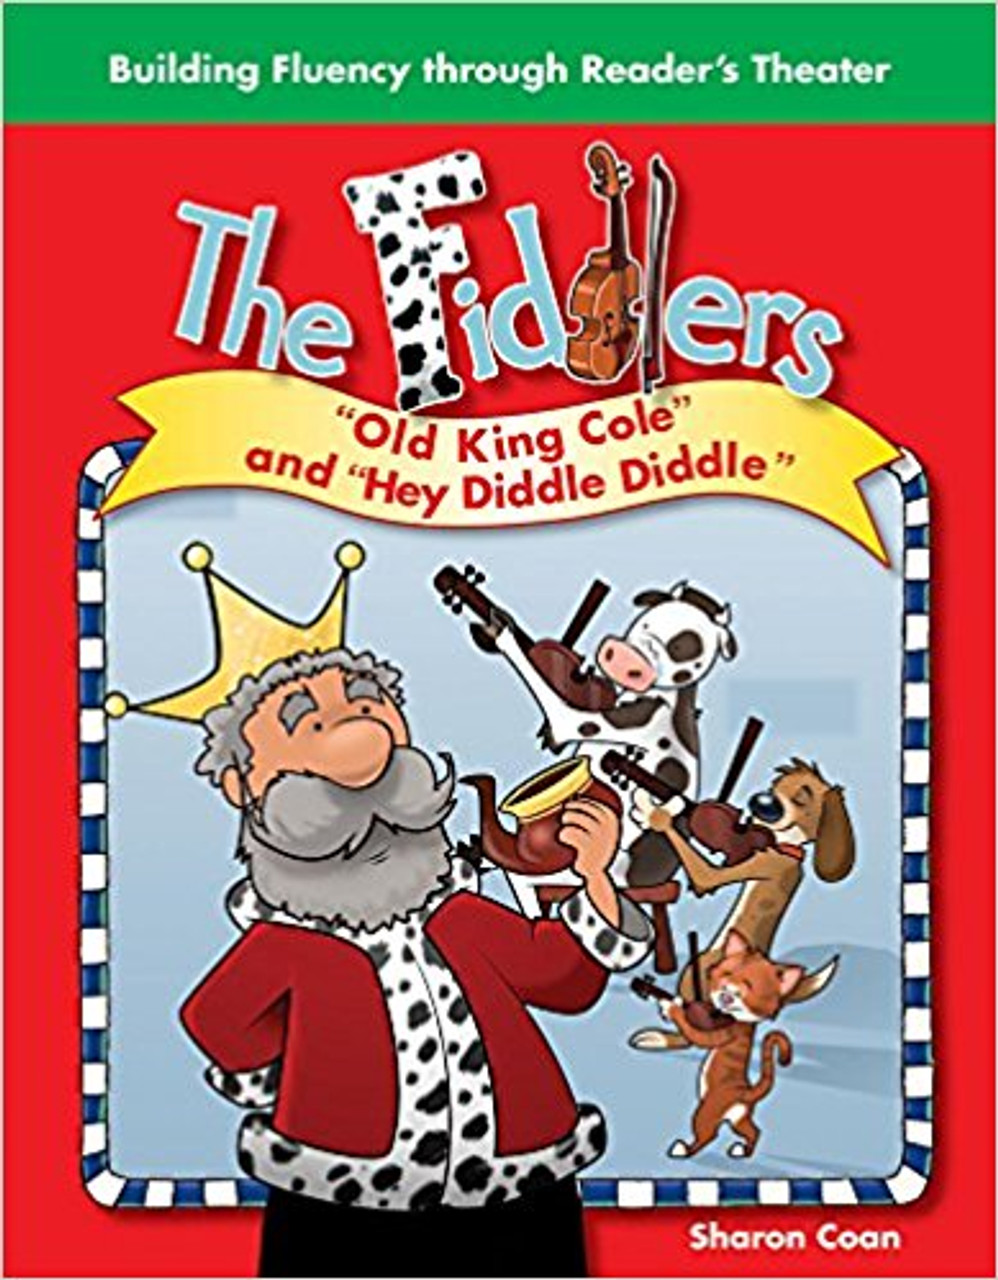 The Fiddlers by Sharon Coan